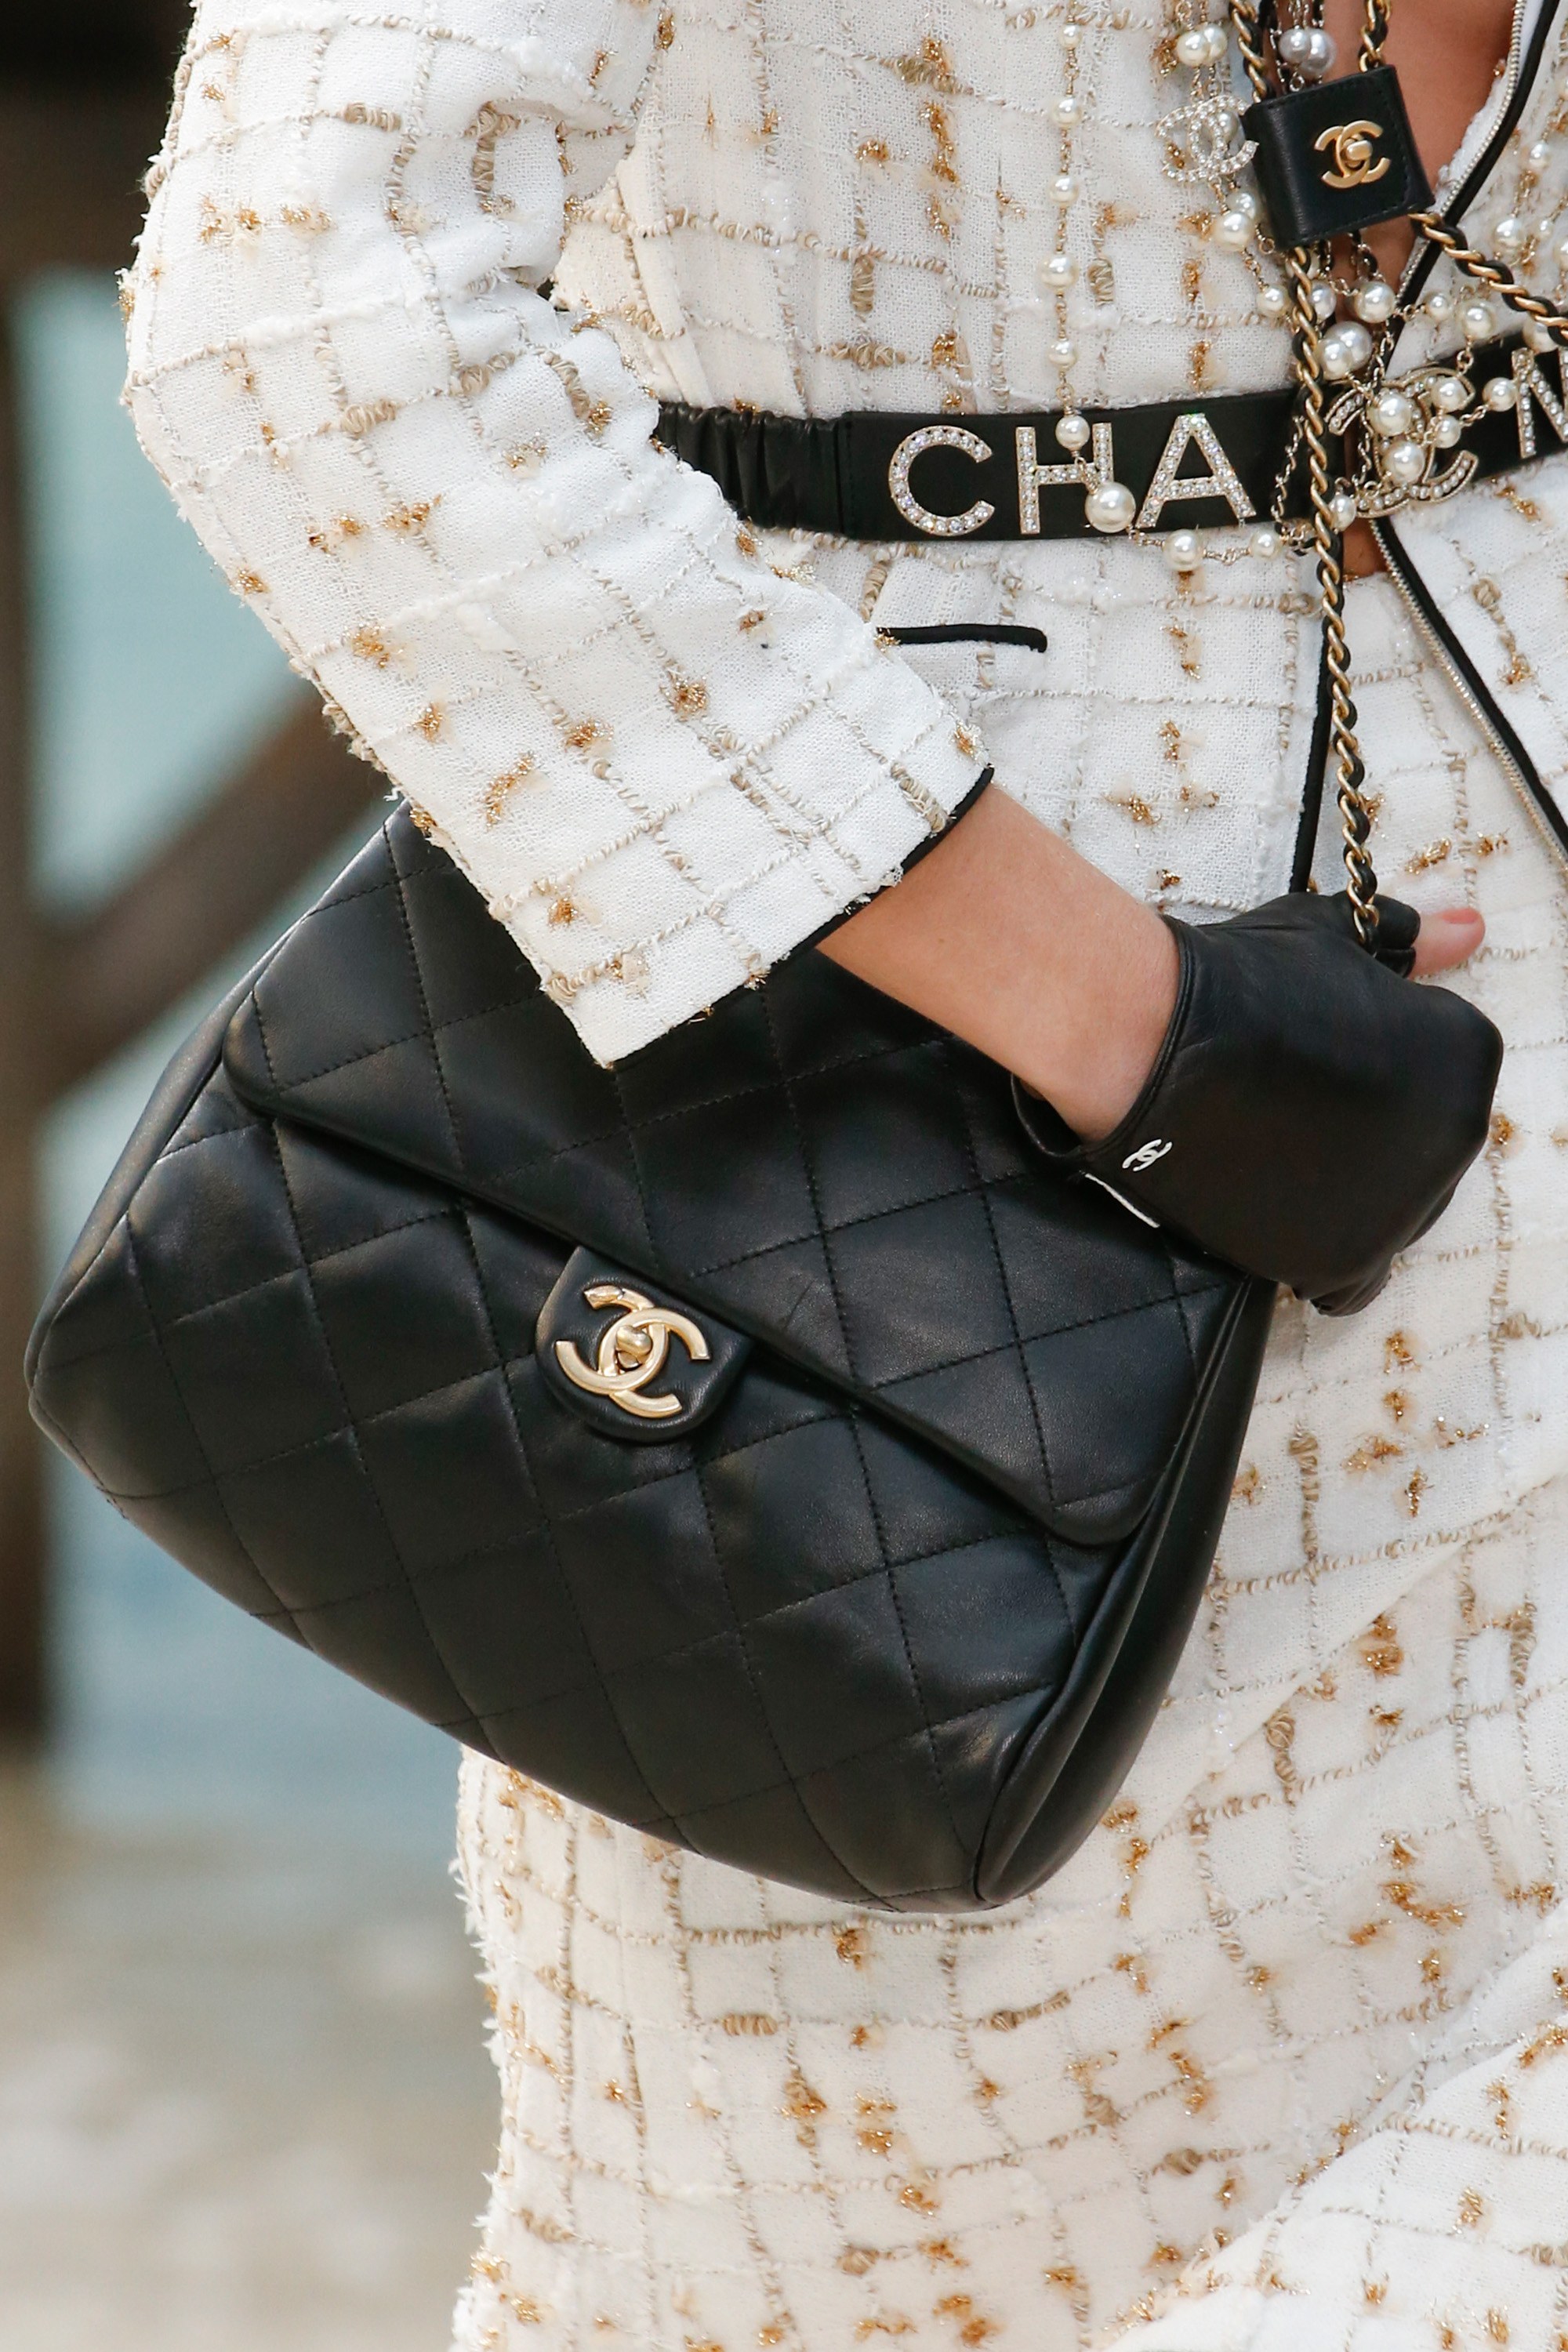 Chanel Medium Flap Bag Price 2019 The Art Of Mike Mignola - chanel black bag roblox